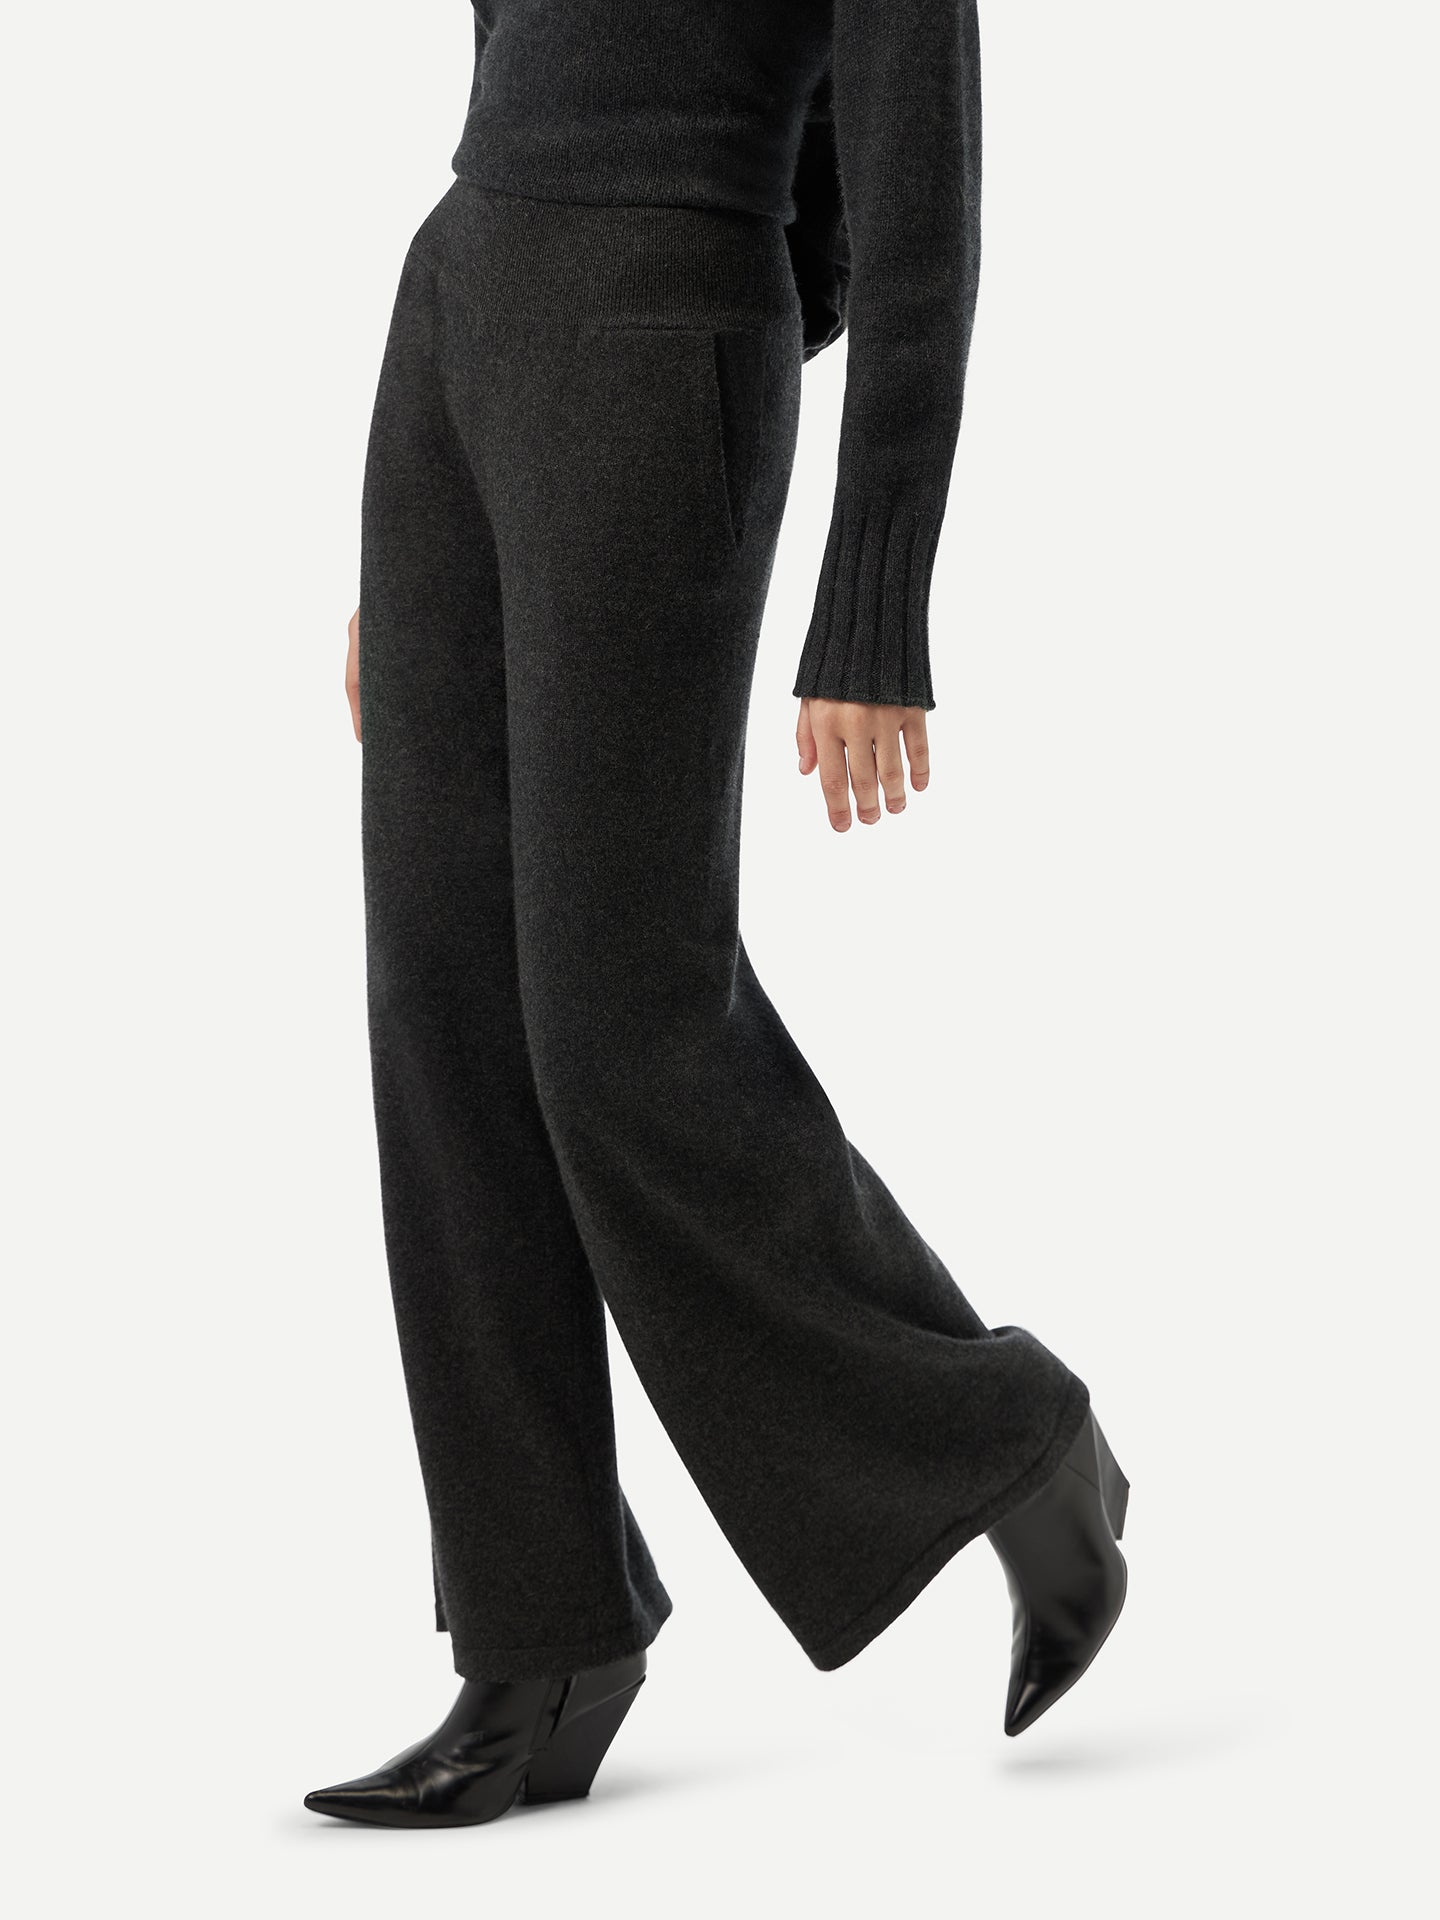 Women's Wide-Leg Cashmere Pants Charcoal - Gobi Cashmere